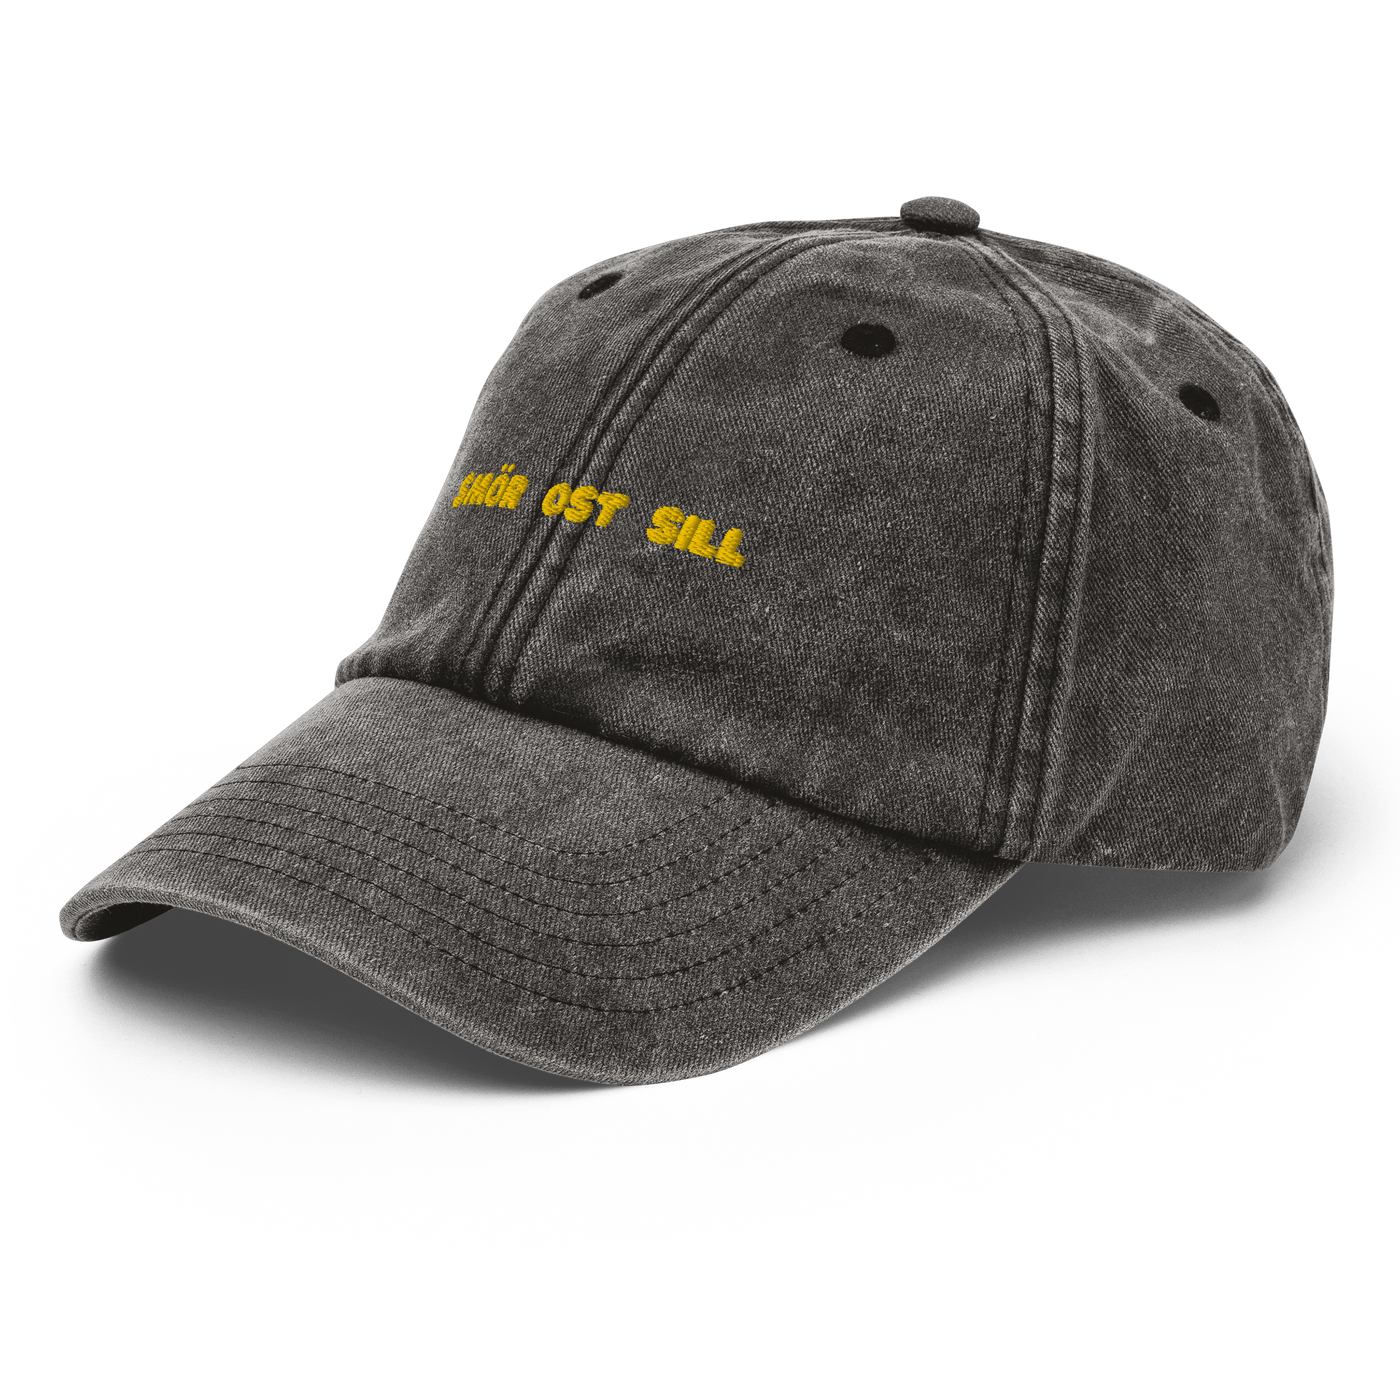 SOS Vintage Hat - Vintage Black - Just Another Cap Store